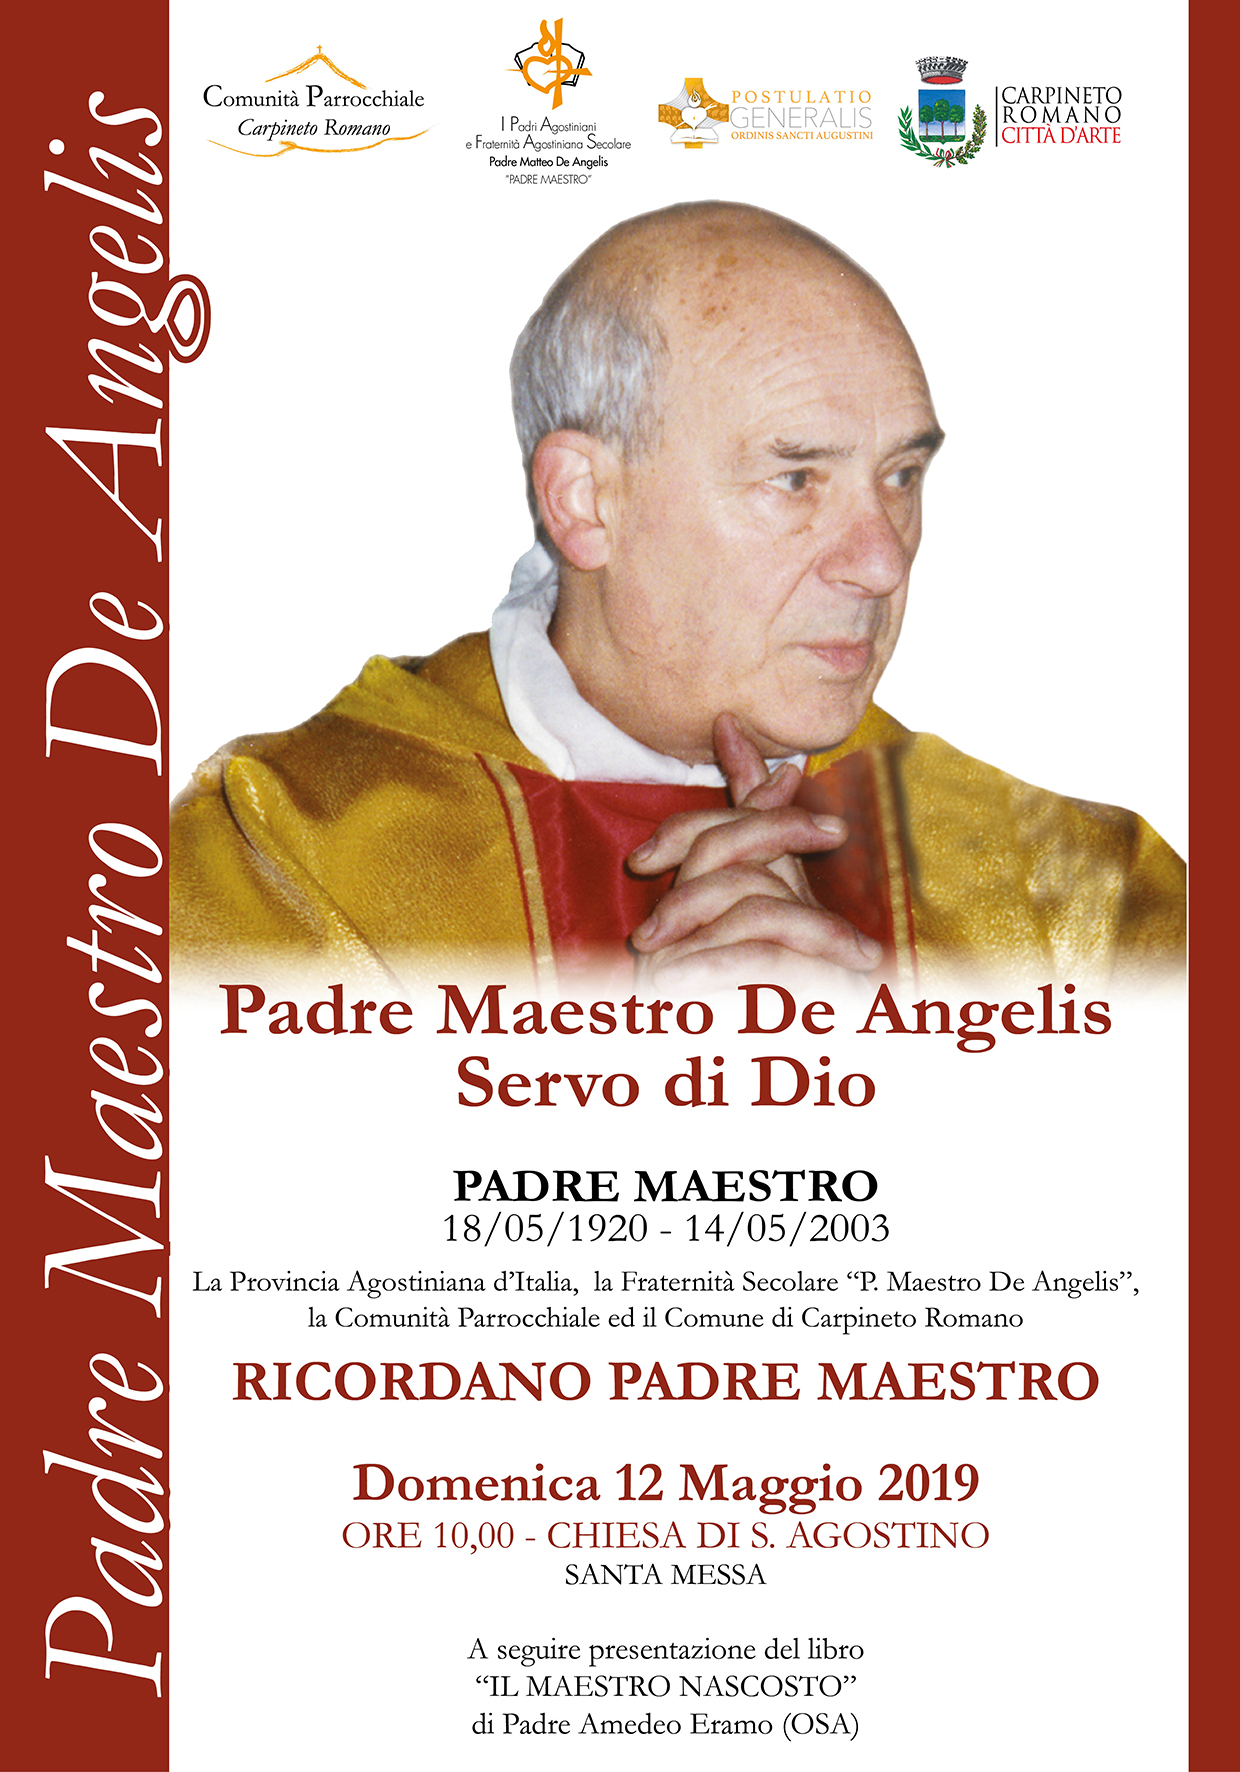 locandina_padre_maestro_